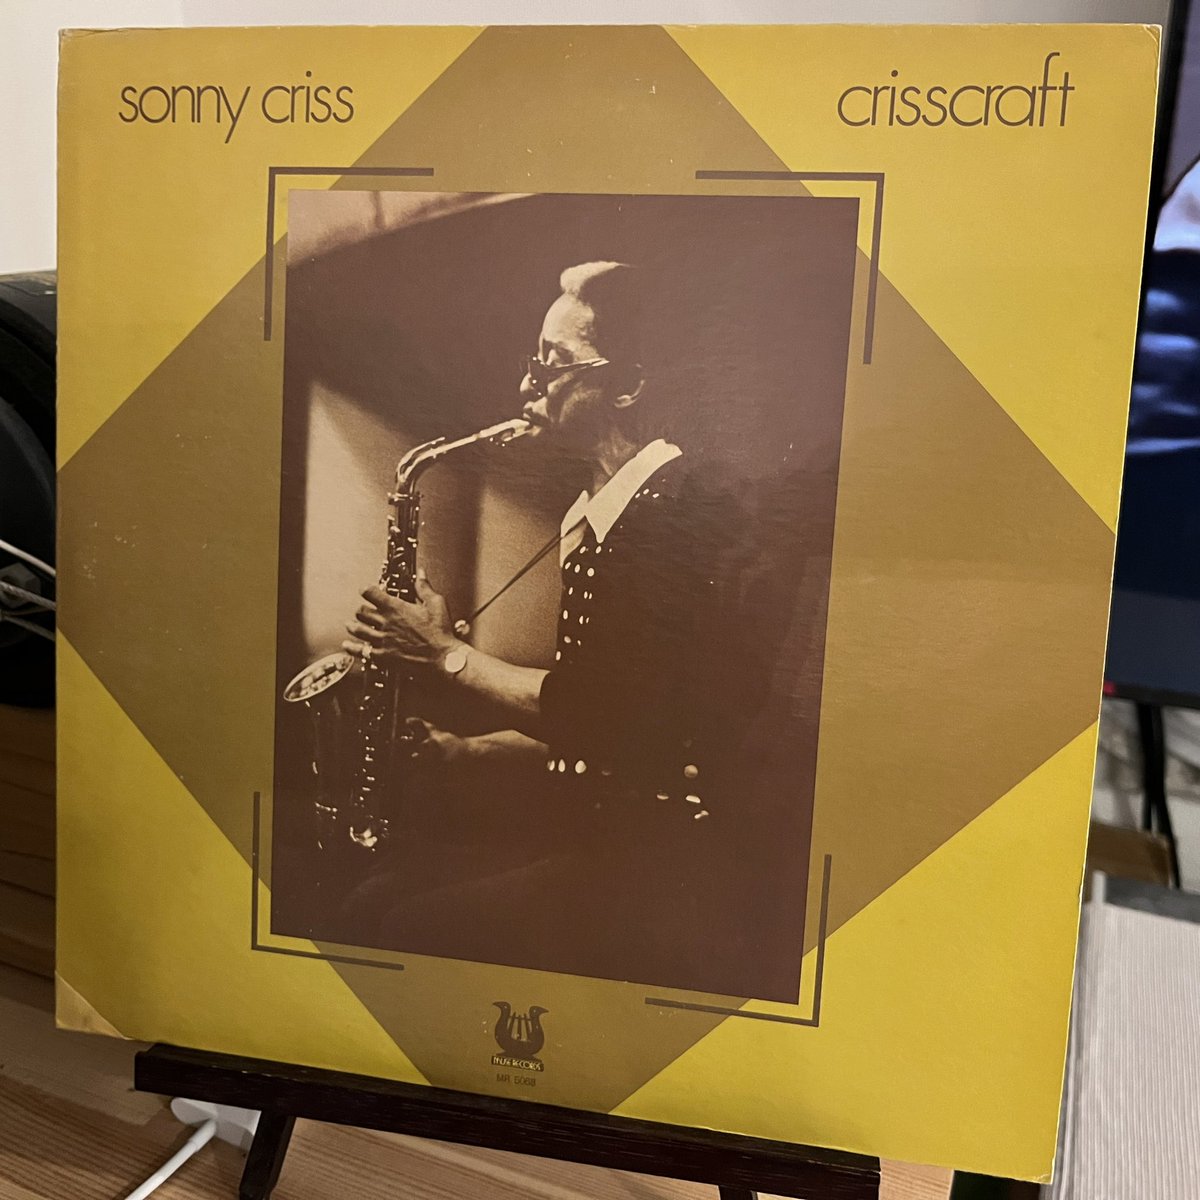 #NowPlaying #jazz
sonny criss
crisscraft 

ソニークリスの75年MUSE盤◎